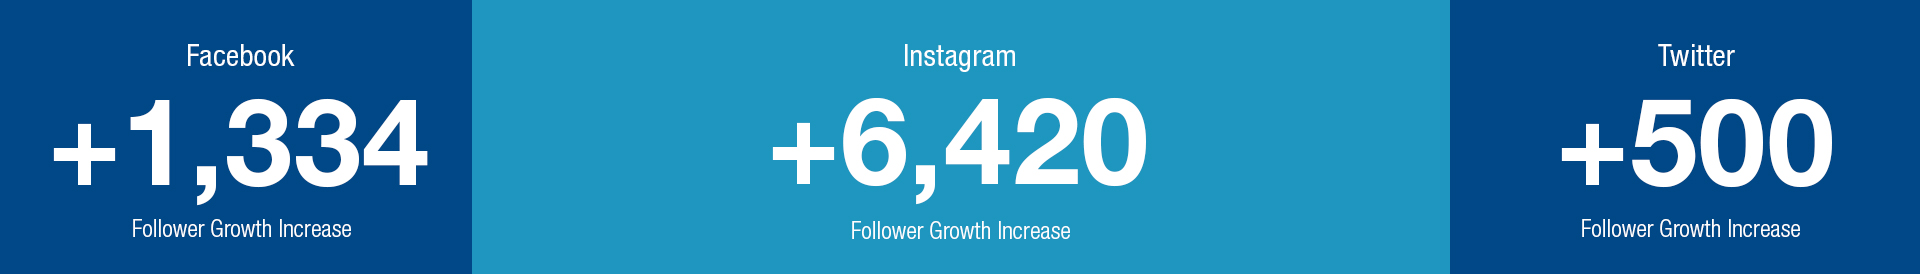 Statistics stating: Follower Growth increase: +1,334 Facebook, +6,420 Instagram, +500 Twitter